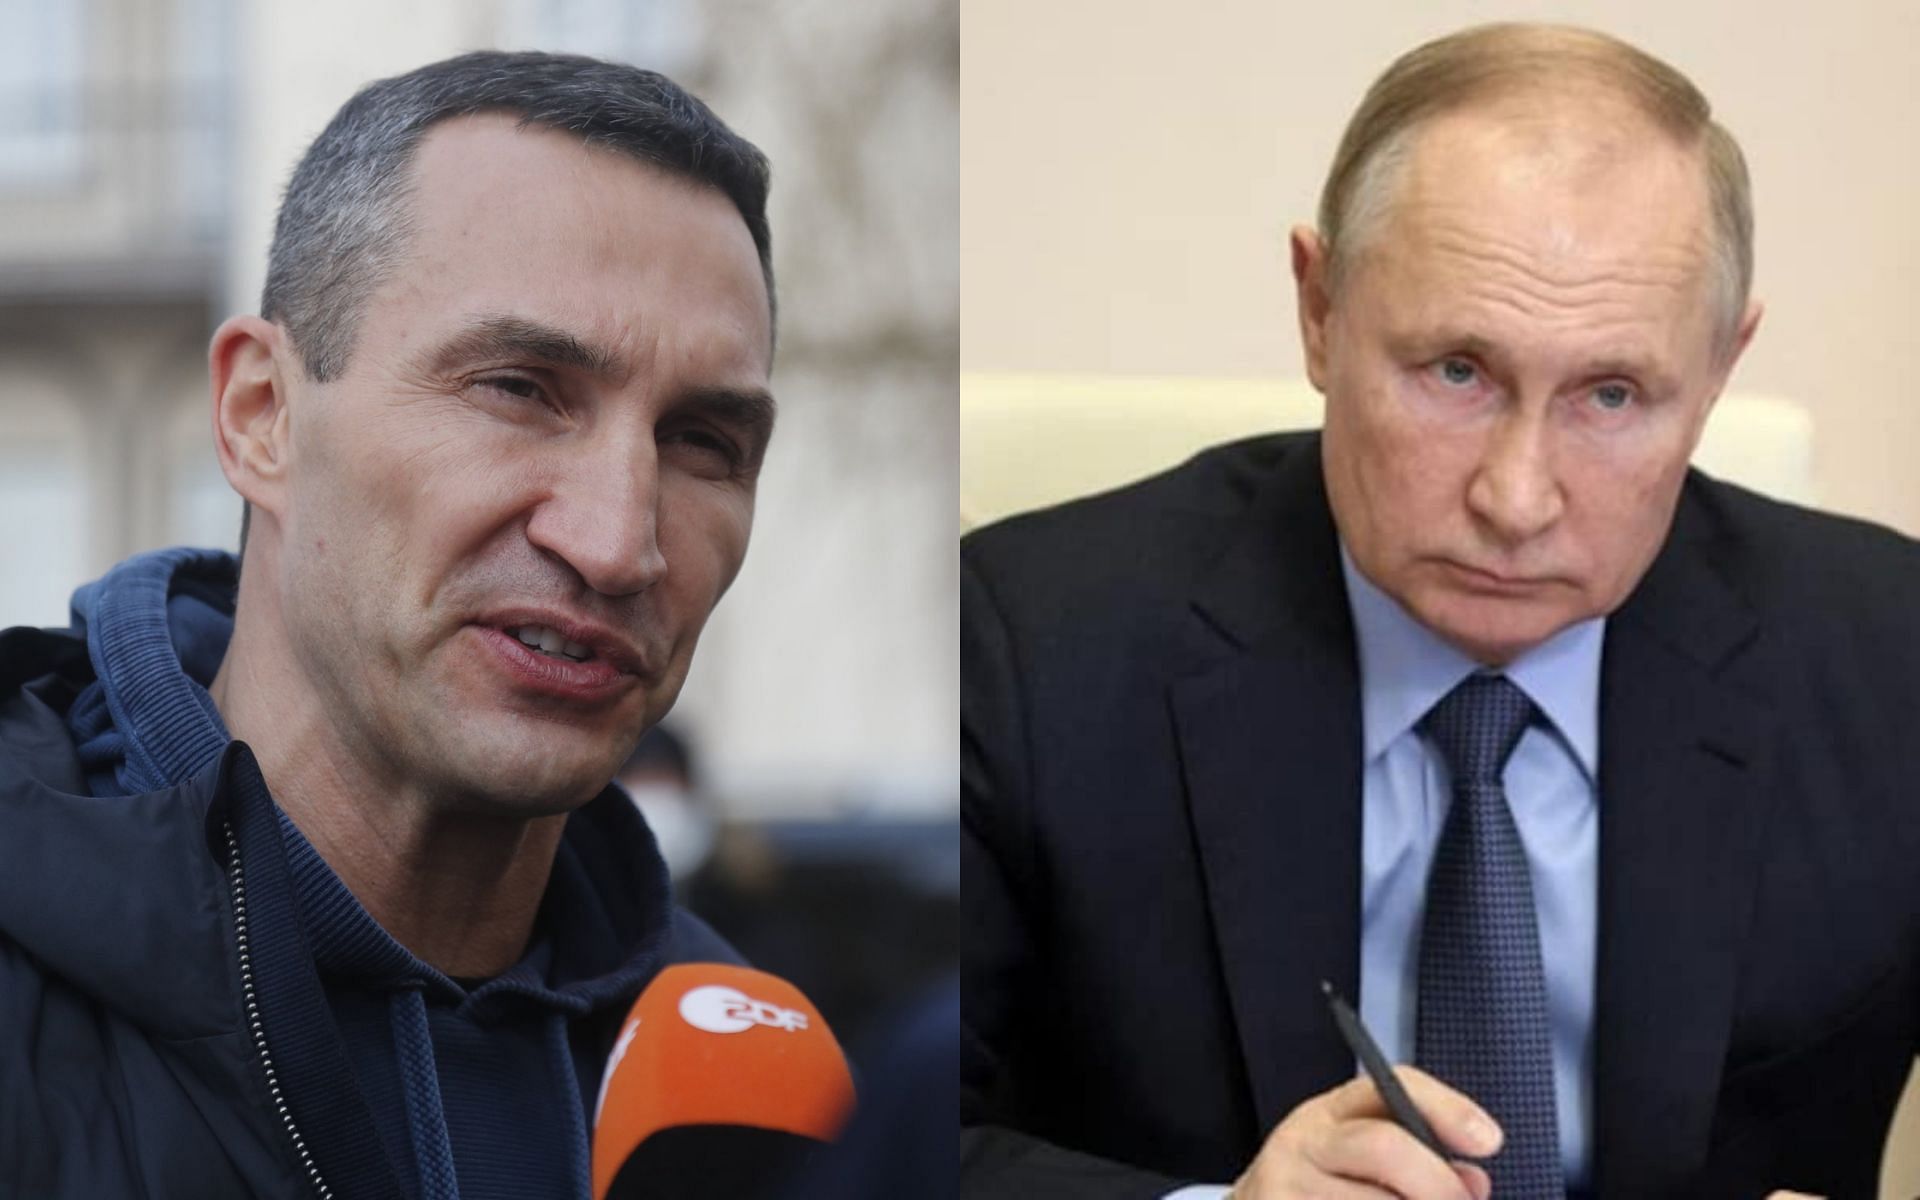 Wladimir Klitschko (left) and Vladimir Putin (right)